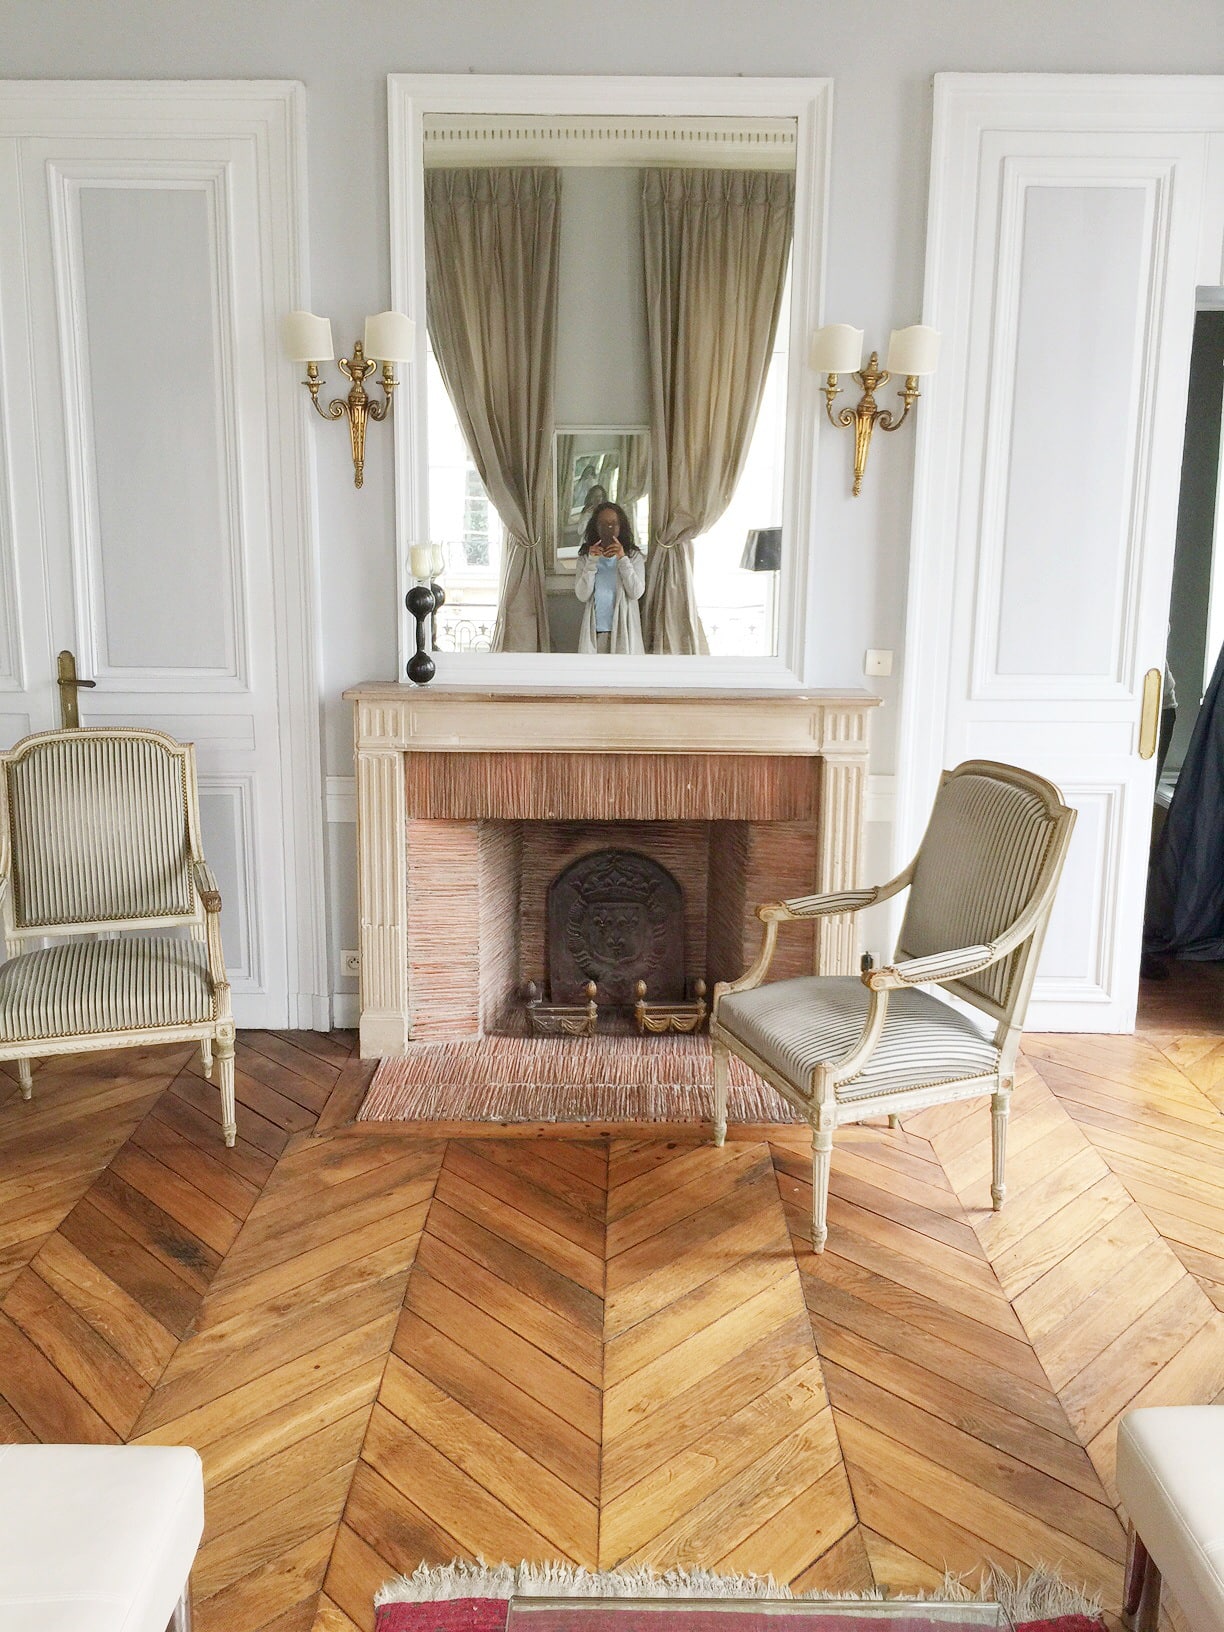 paris-apartment-fireplace-mantel-herringbone-floors-cococozy